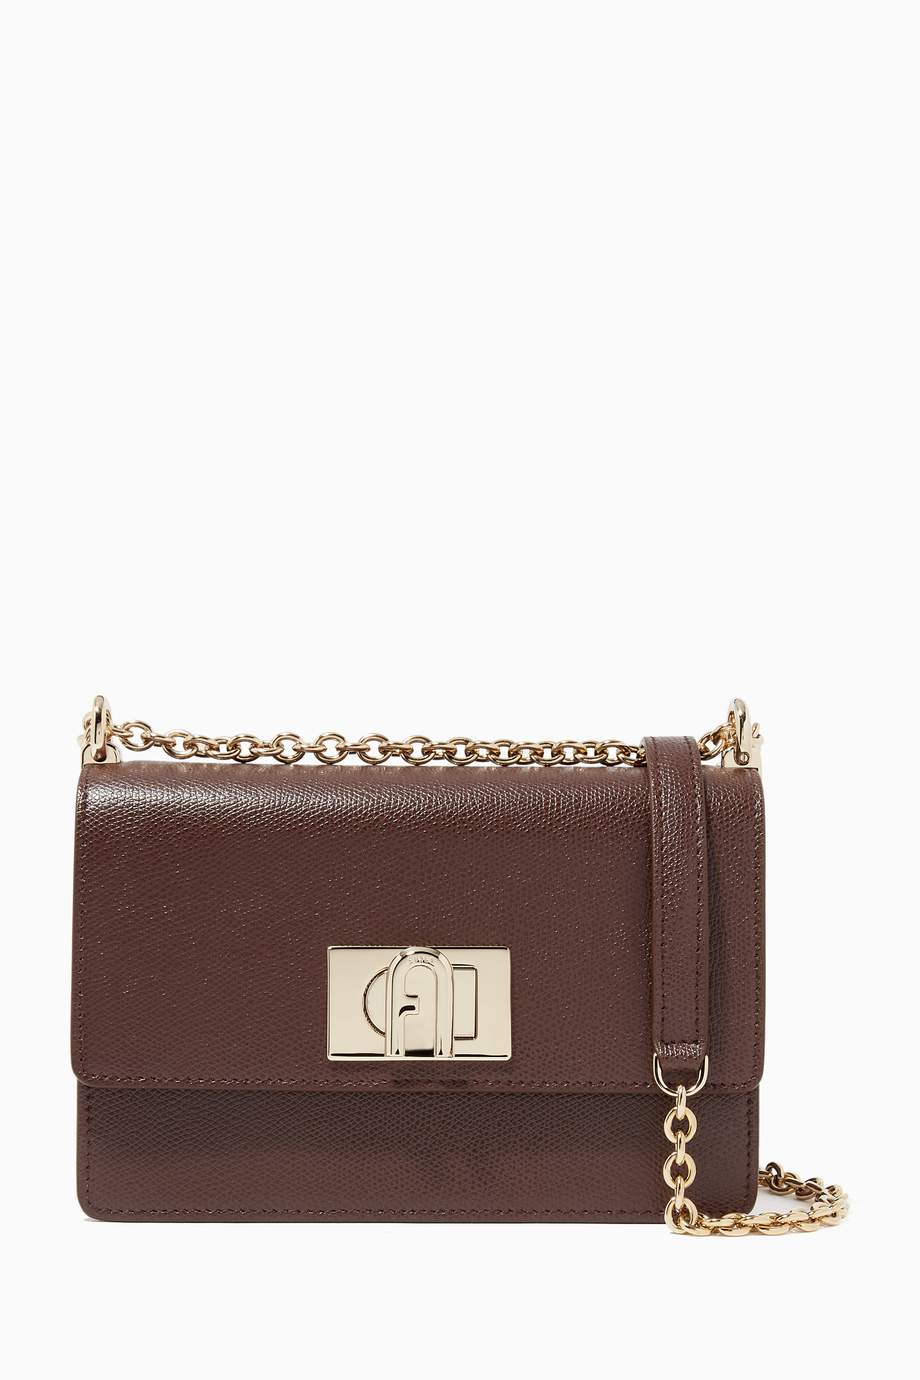 Shop Furla Brown Furla 1927 Mini Crossbody Bag in Leather for Women ...